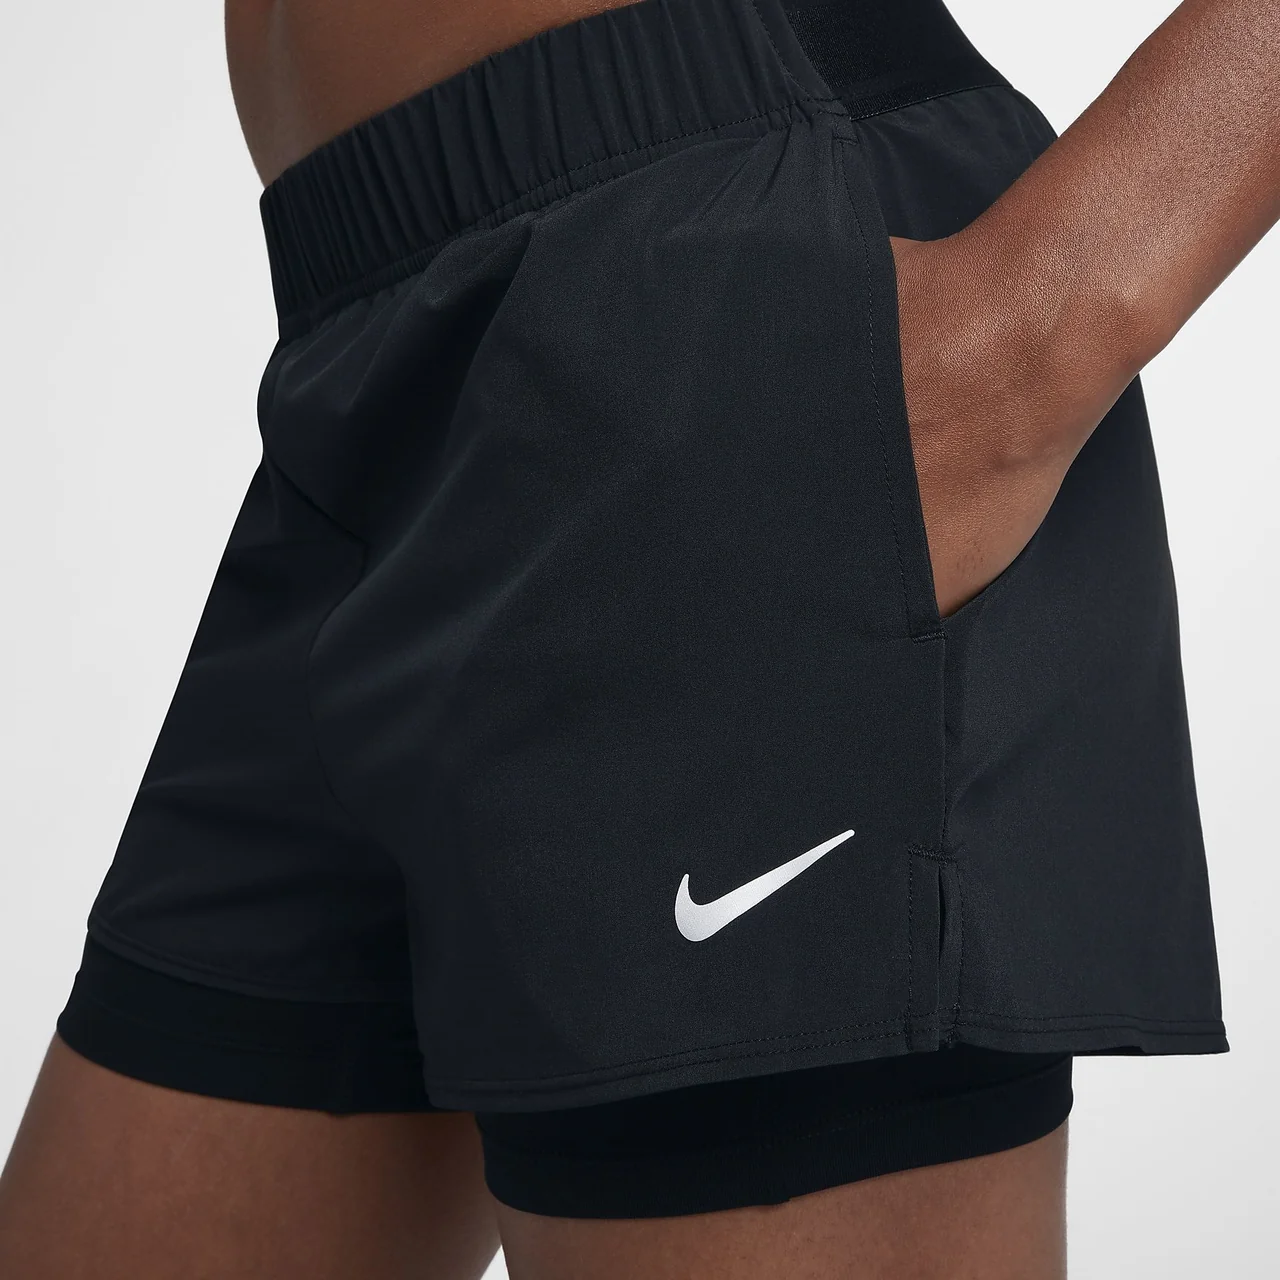 Nike Court Flex Shorts Women Black (With Pockets)